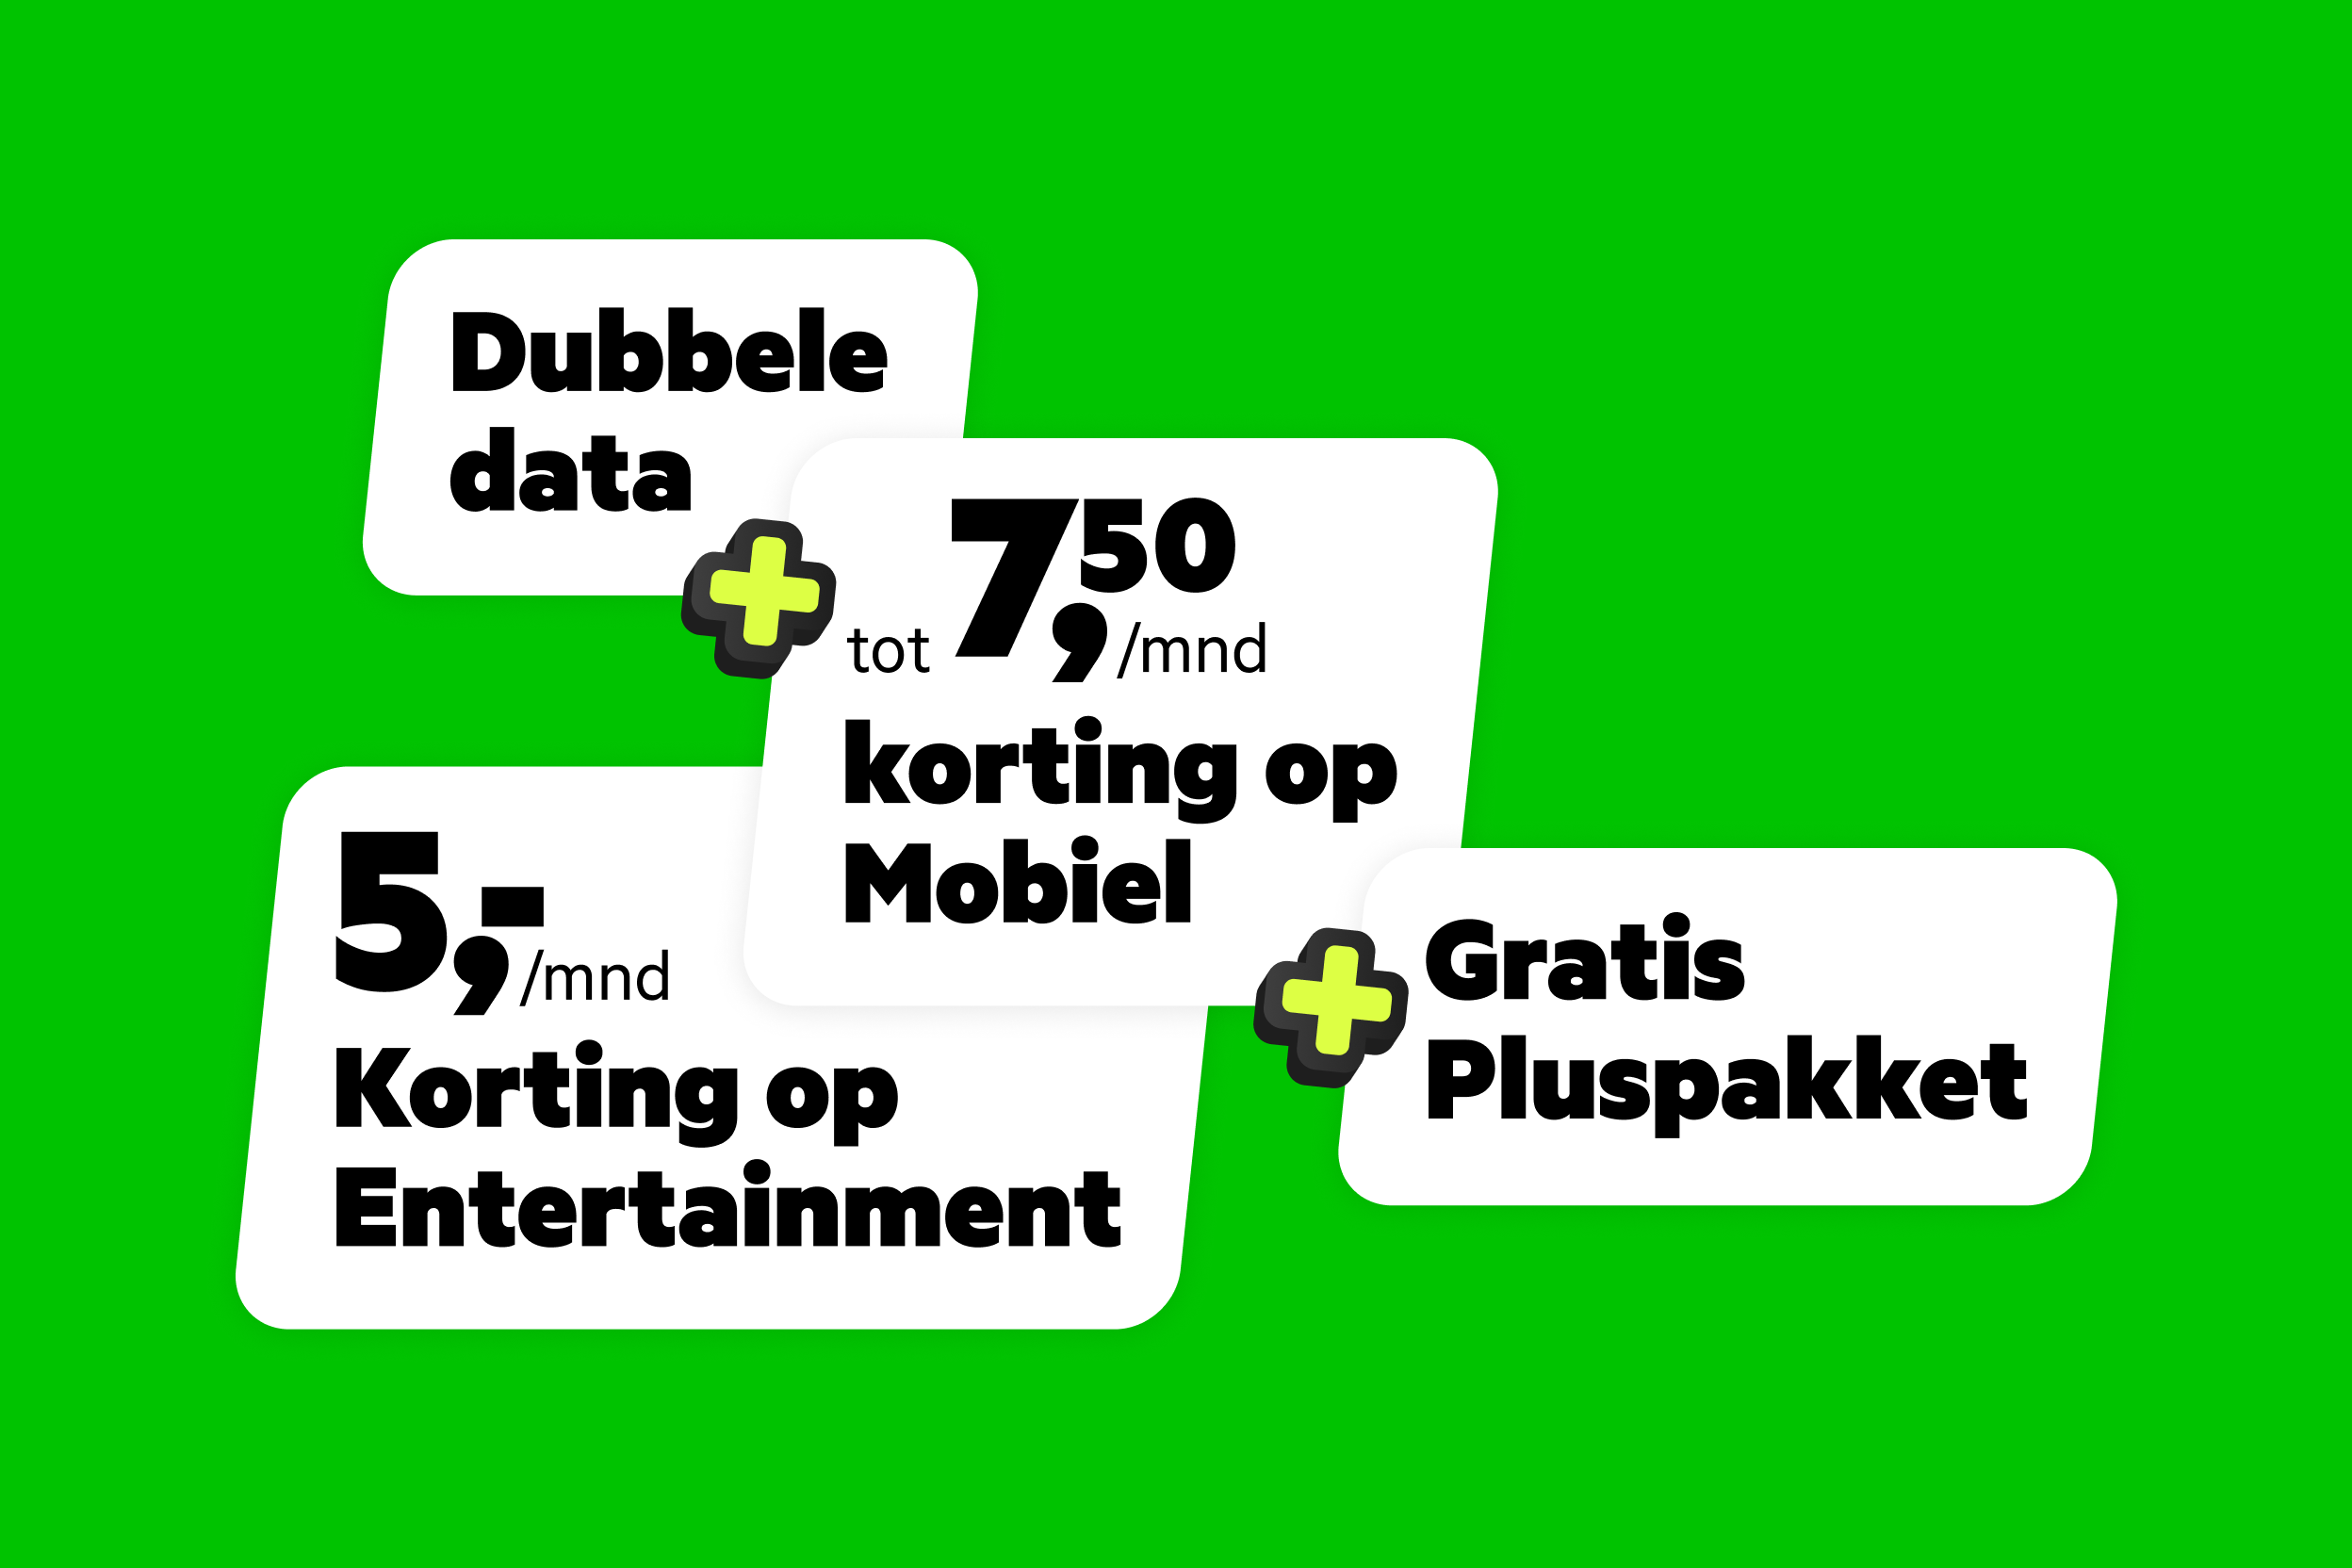 tot 7,50 euro korting op mobiel + 5 euro korting op entertainment + dubbele data + gratis Pluspakket